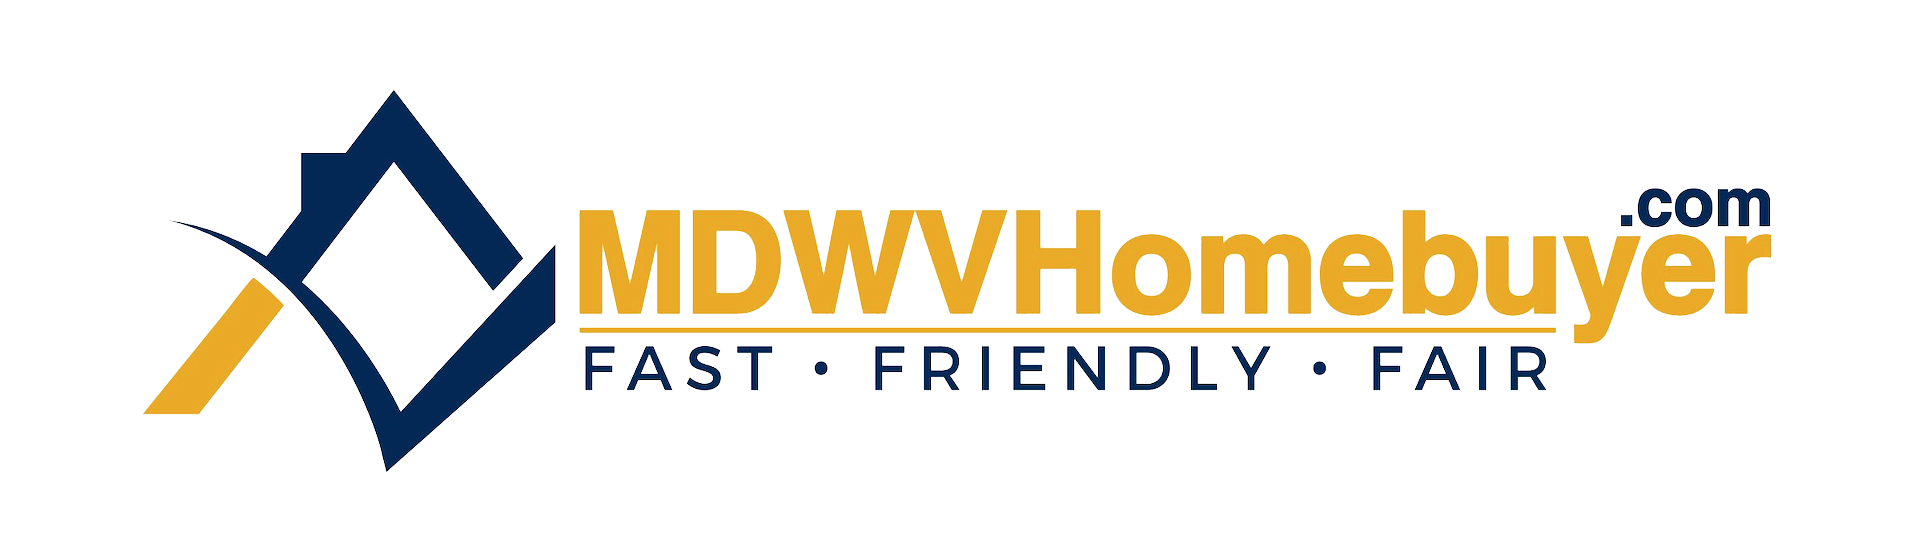 MD WV Homebuyer logo